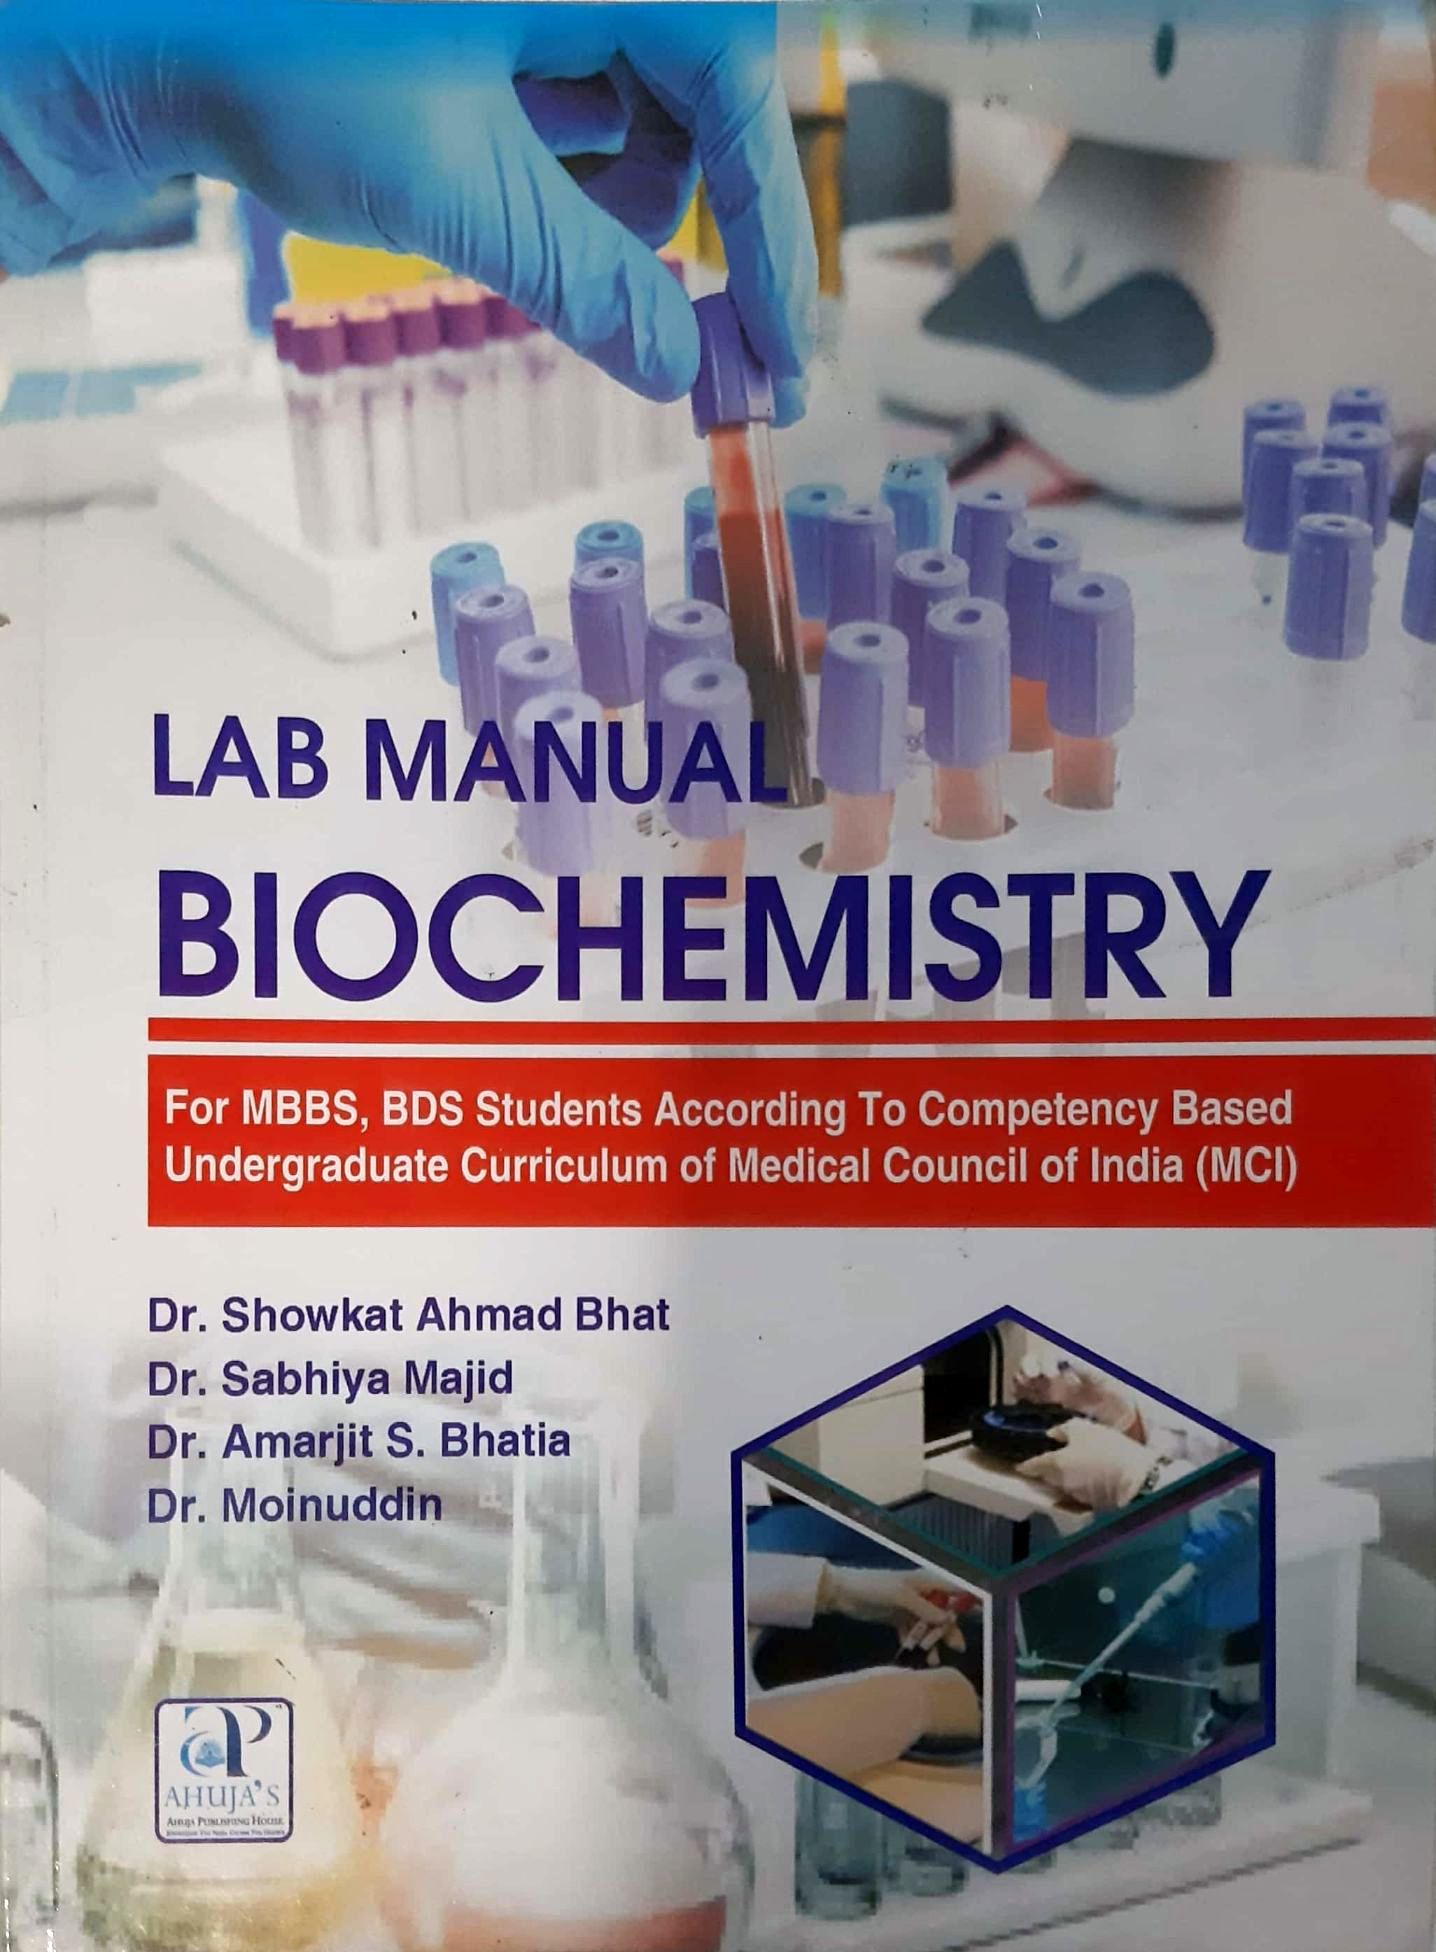 exclusive-publishers/ahuja-publishing-house/lab-manual-biochemistry--9789380316475